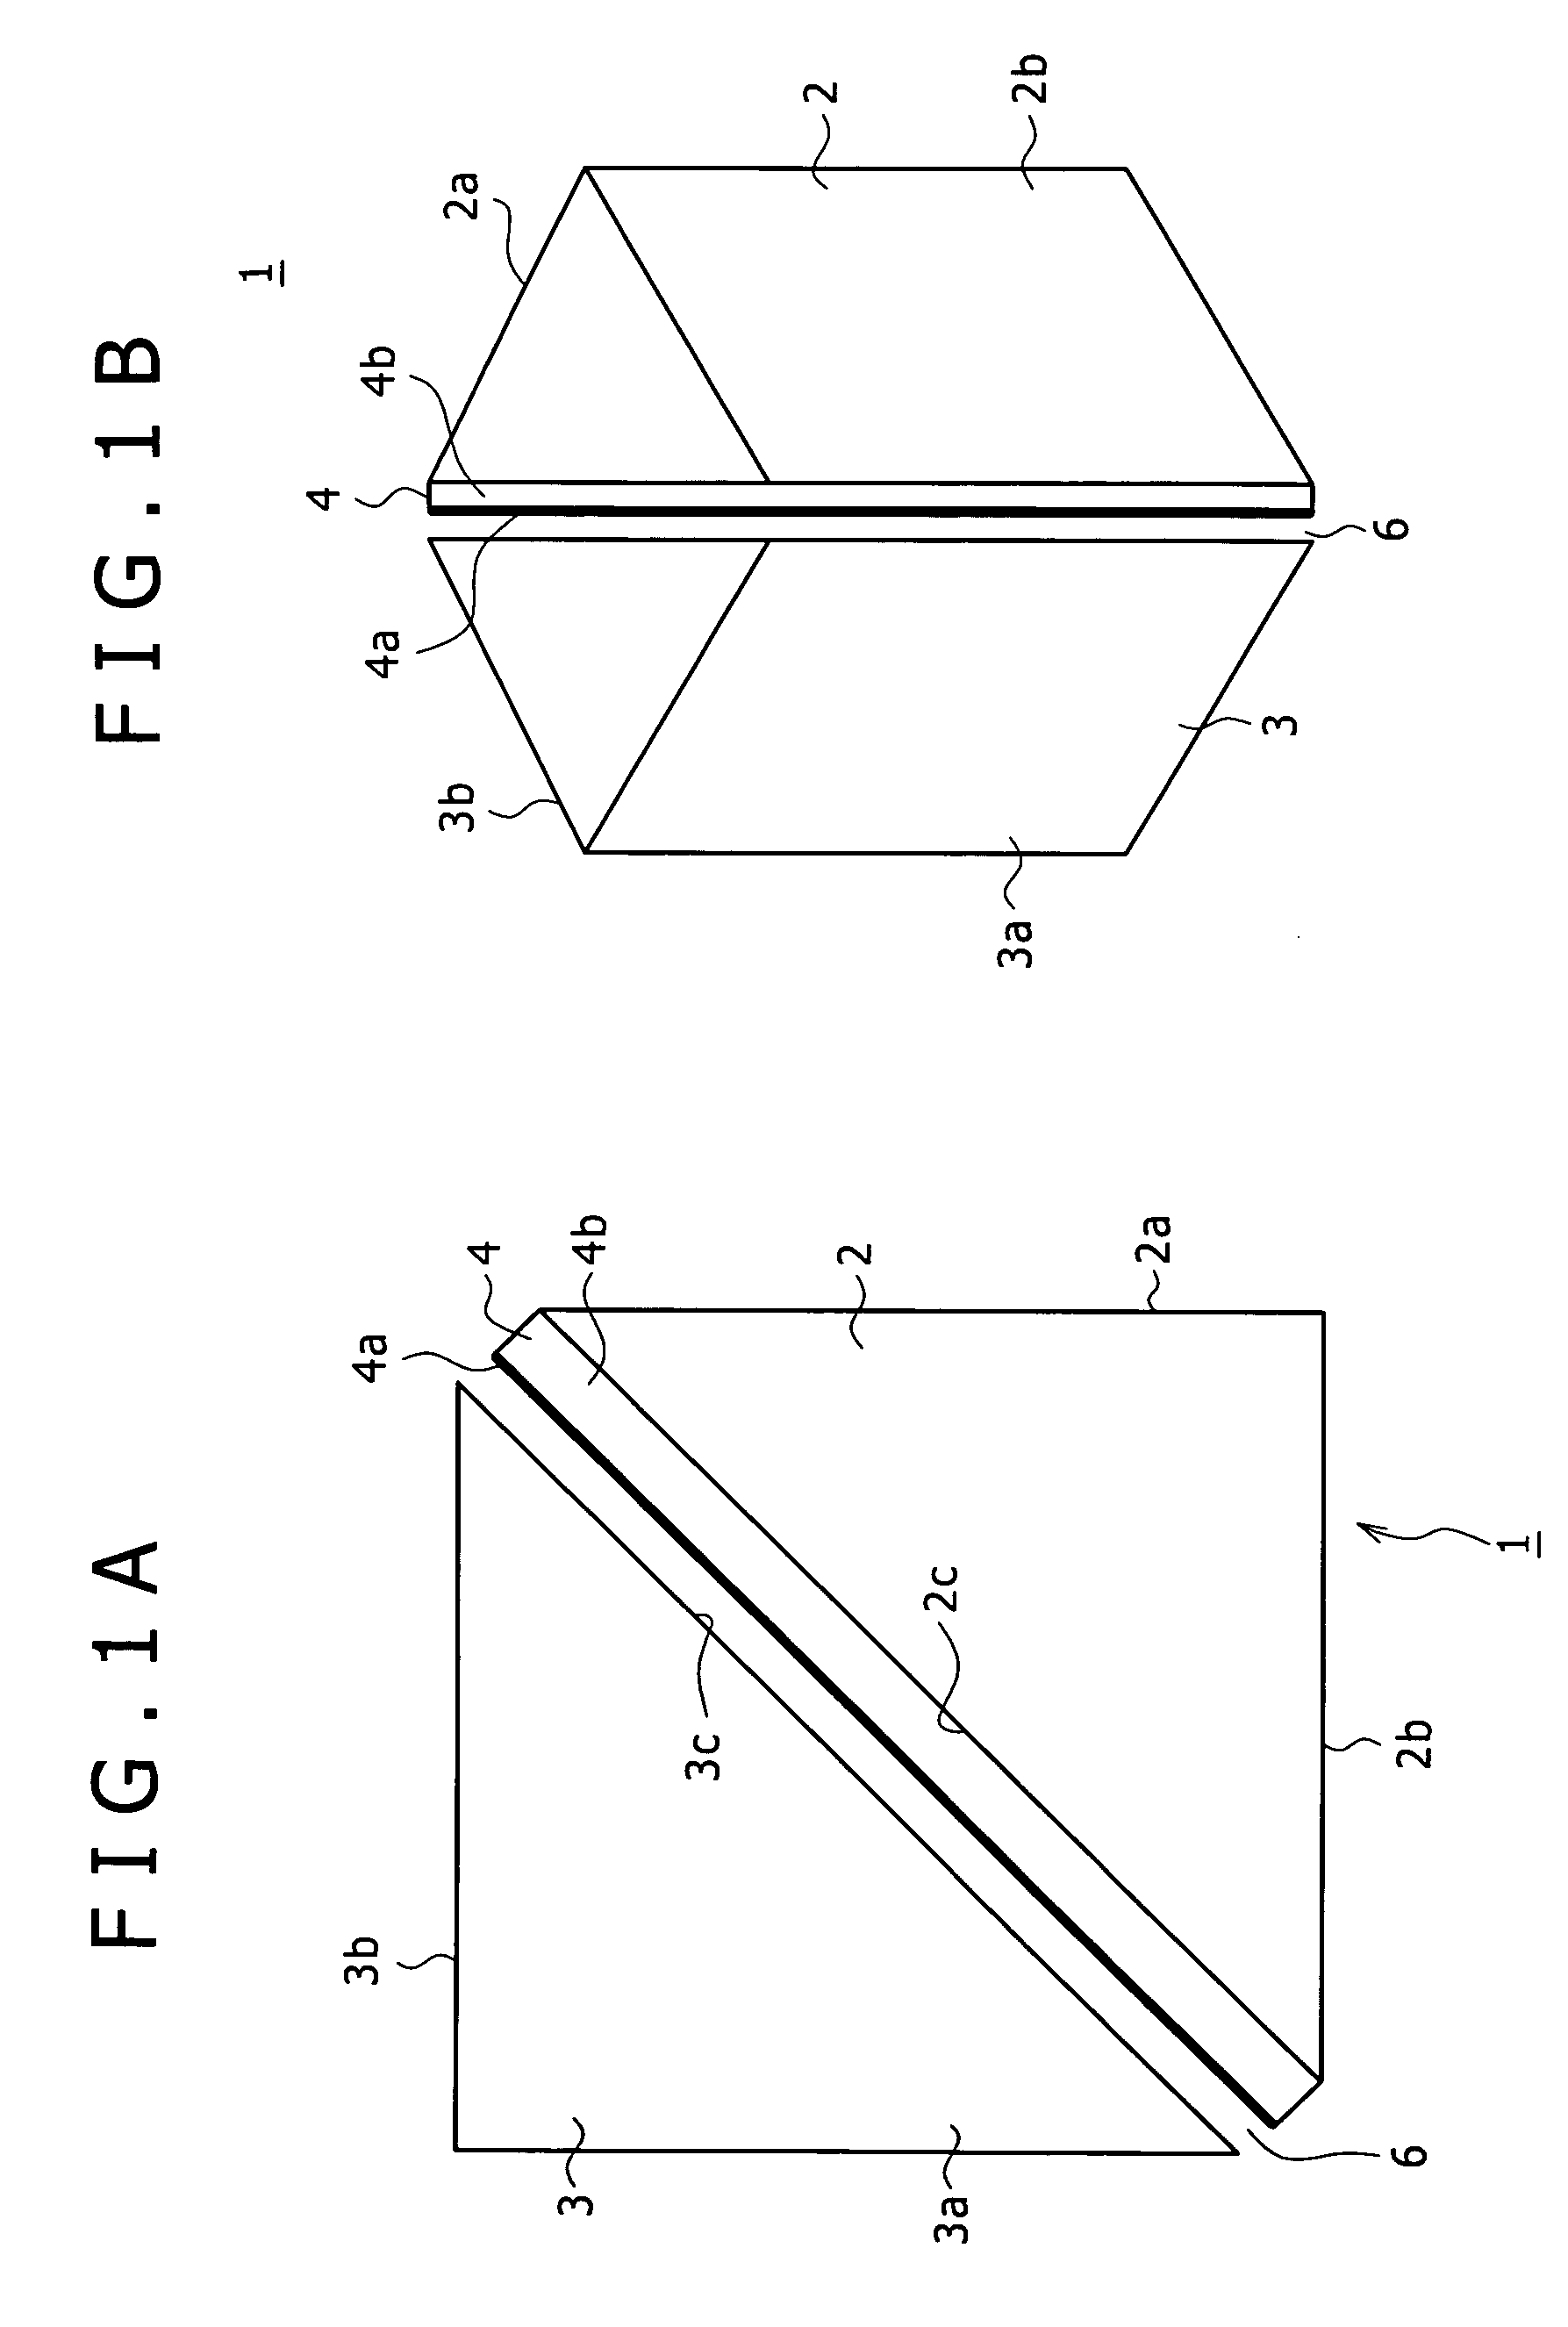 Polarization beam splitter and liquid crystal projector apparatus